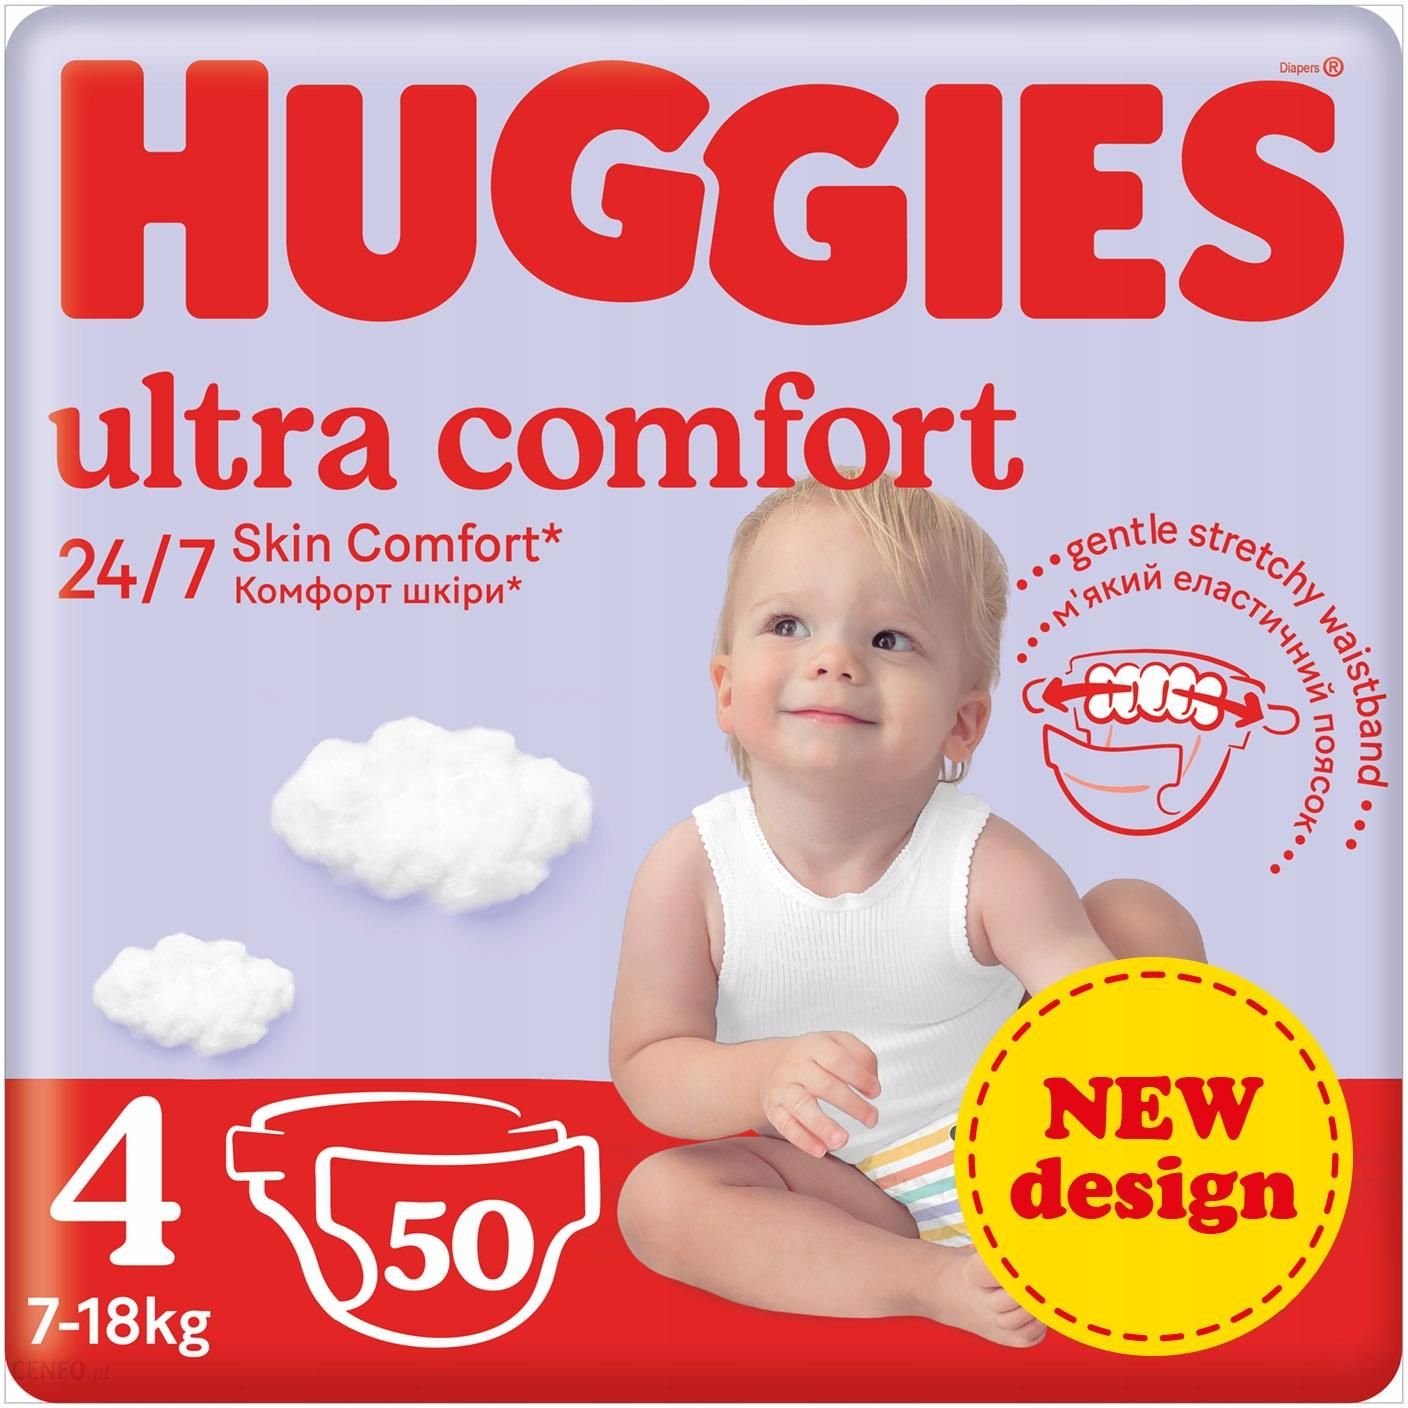 huggies comfort opinie